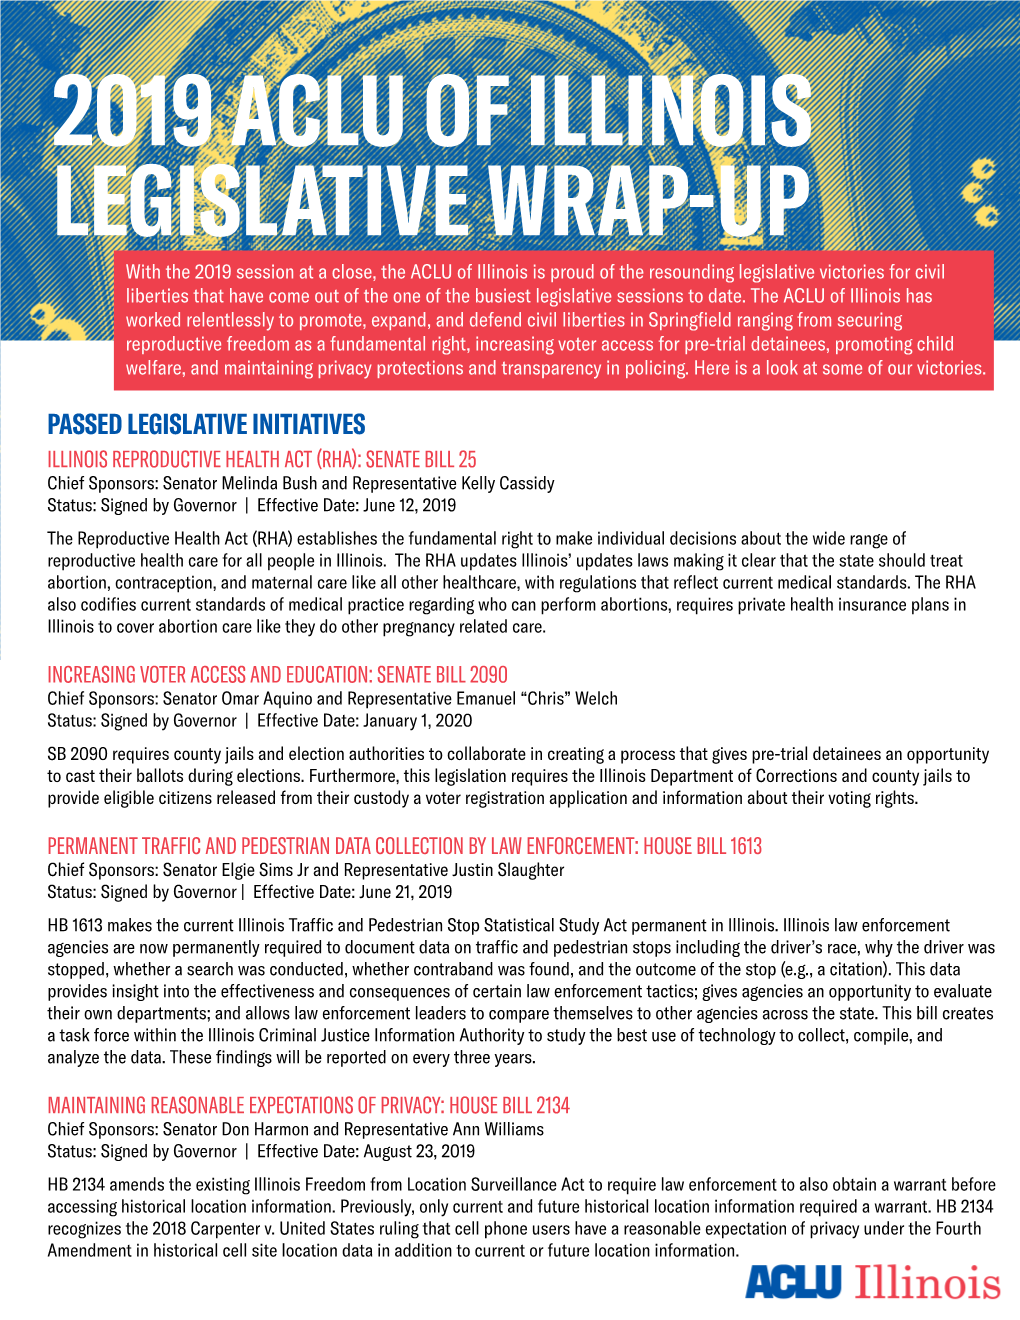 Legislative Wrap Up